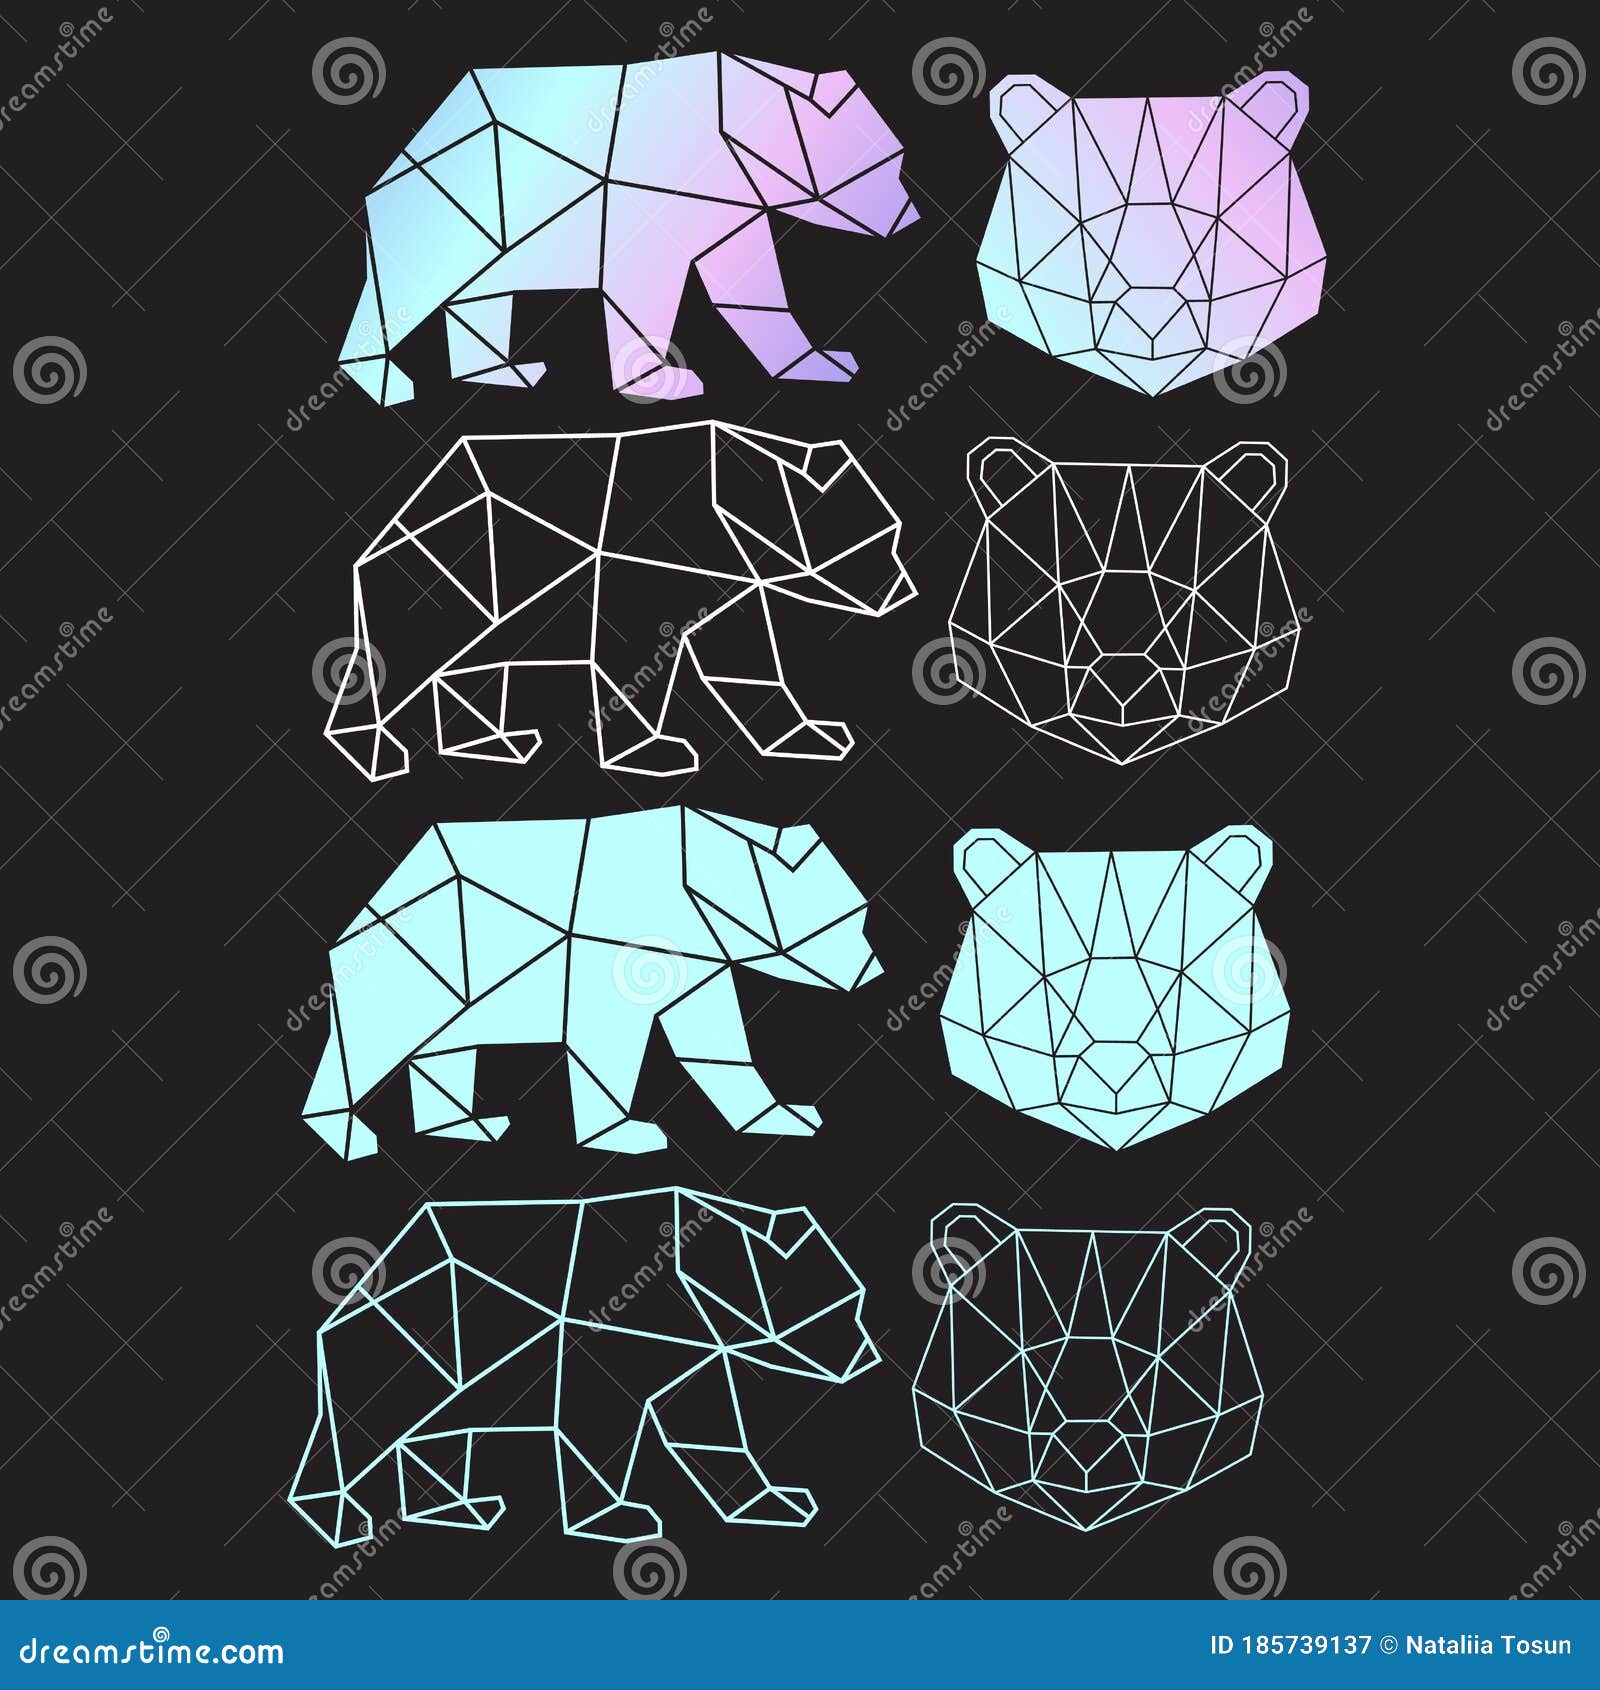 Hamster Line Illustration Geometric Abstract Animal Stock Vector (Royalty  Free) 1816827095 | Shutterstock